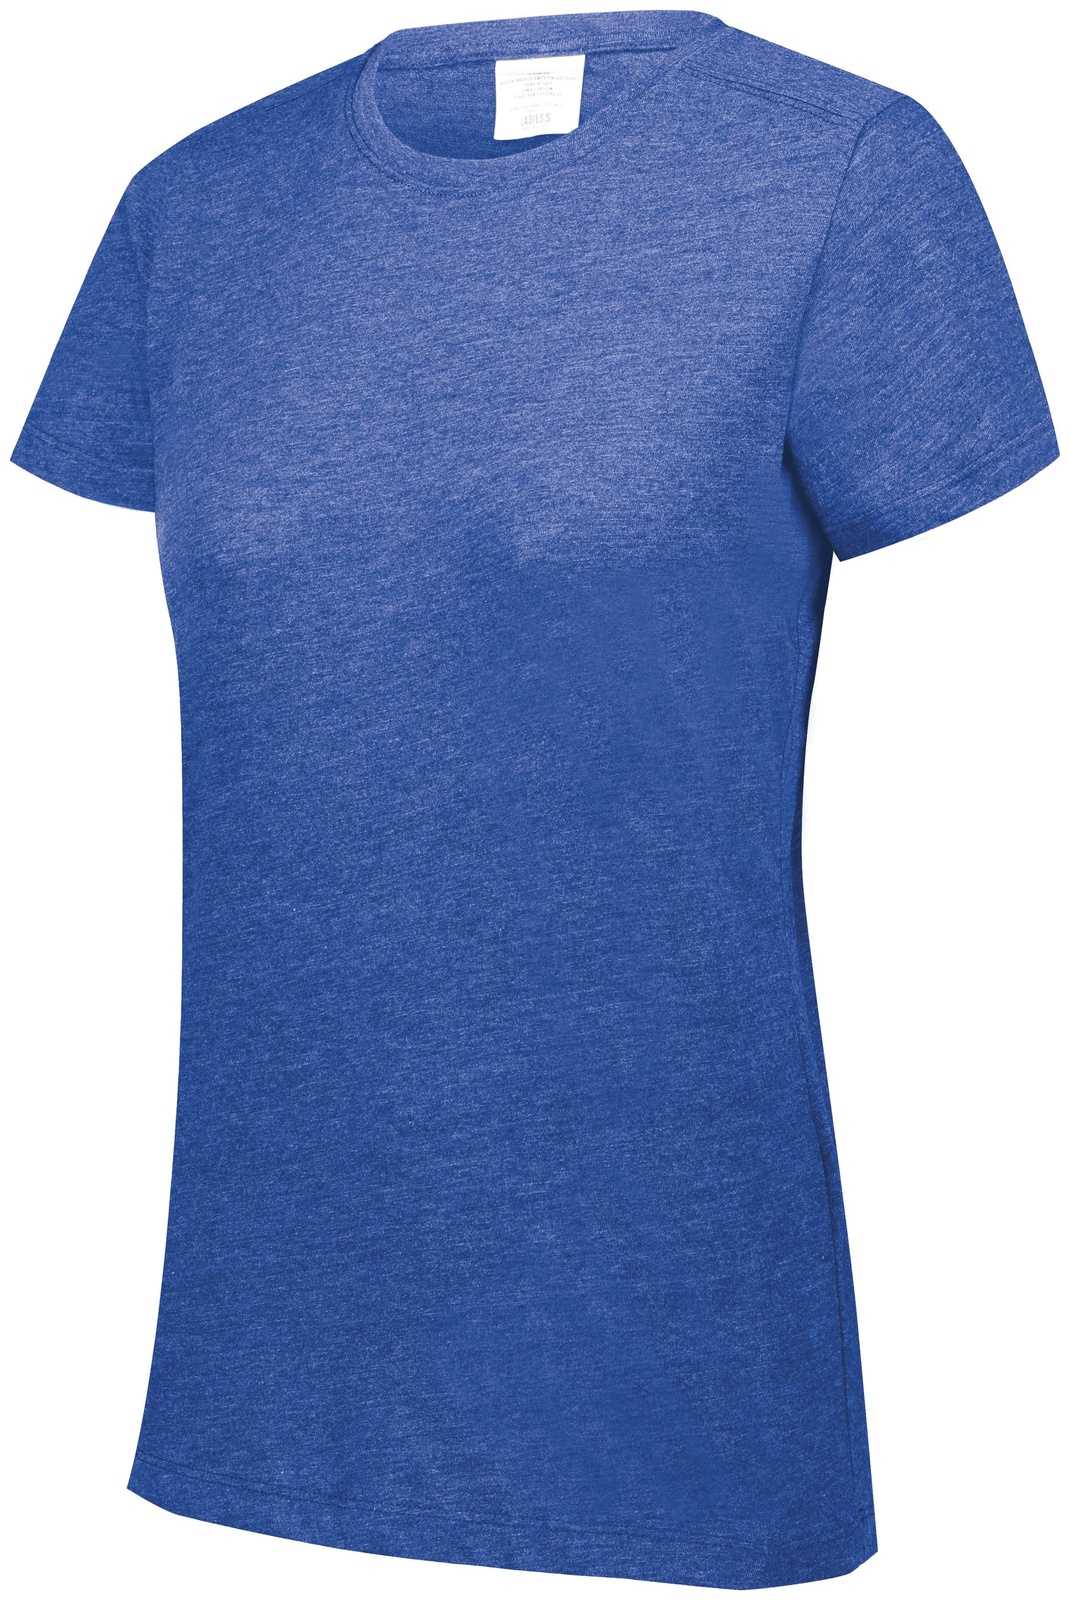 Augusta 3067 Ladies Tri-Blend T-Shirt - Royal Heather - HIT a Double